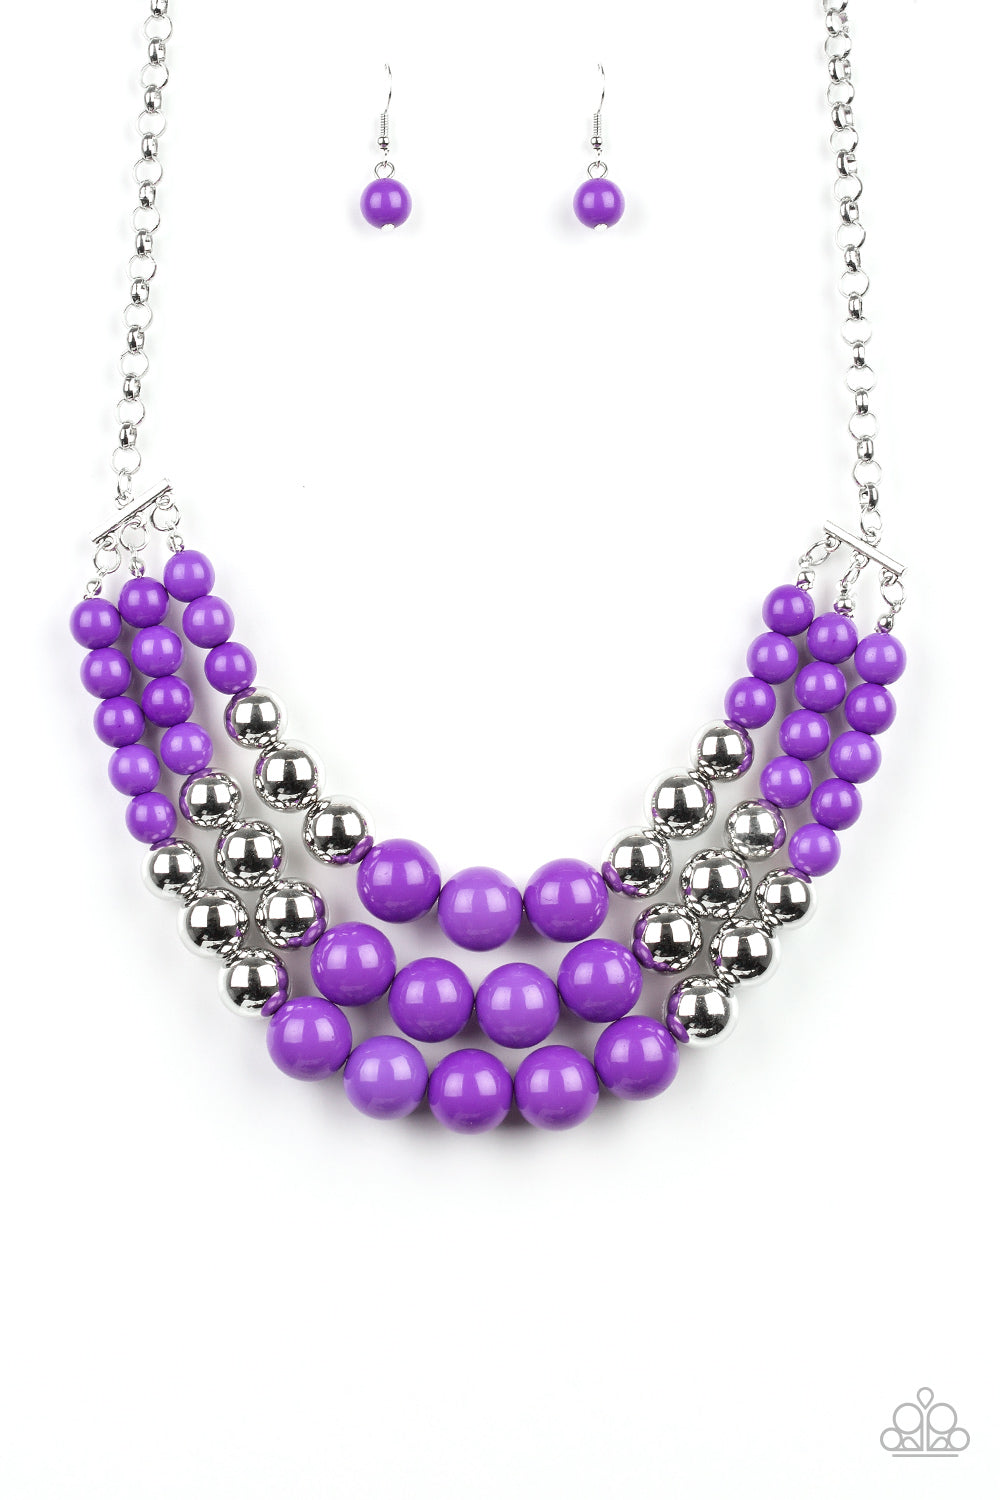 Paparazzi Accessories - Dream Pop - Purple & Silver Necklace